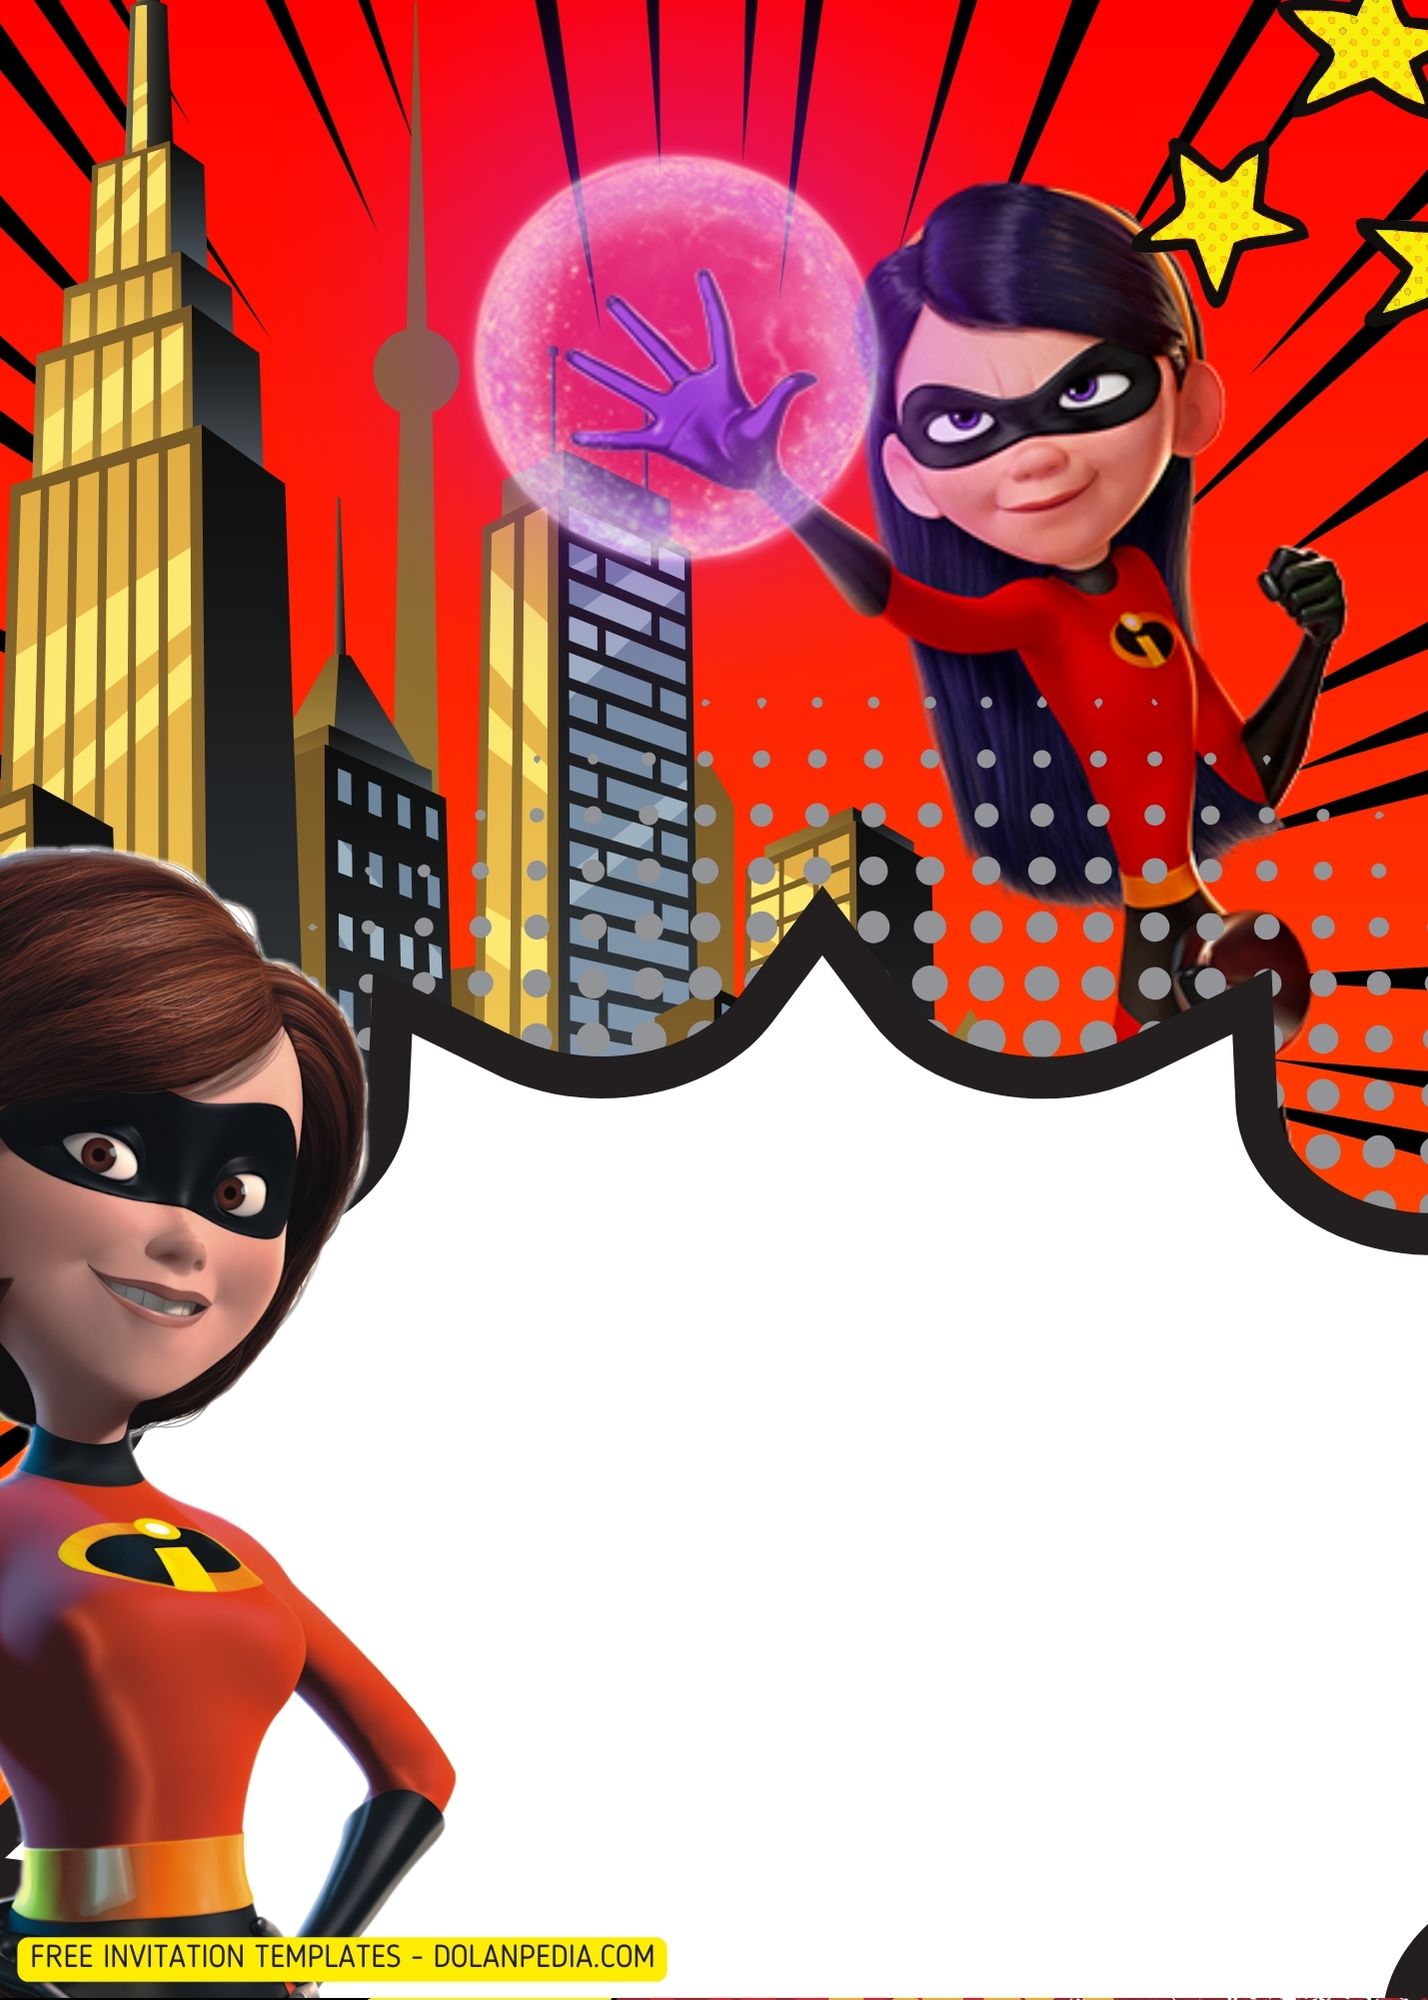 FREE The Incredibles Super Hero Theme Birthday Invitation Templates